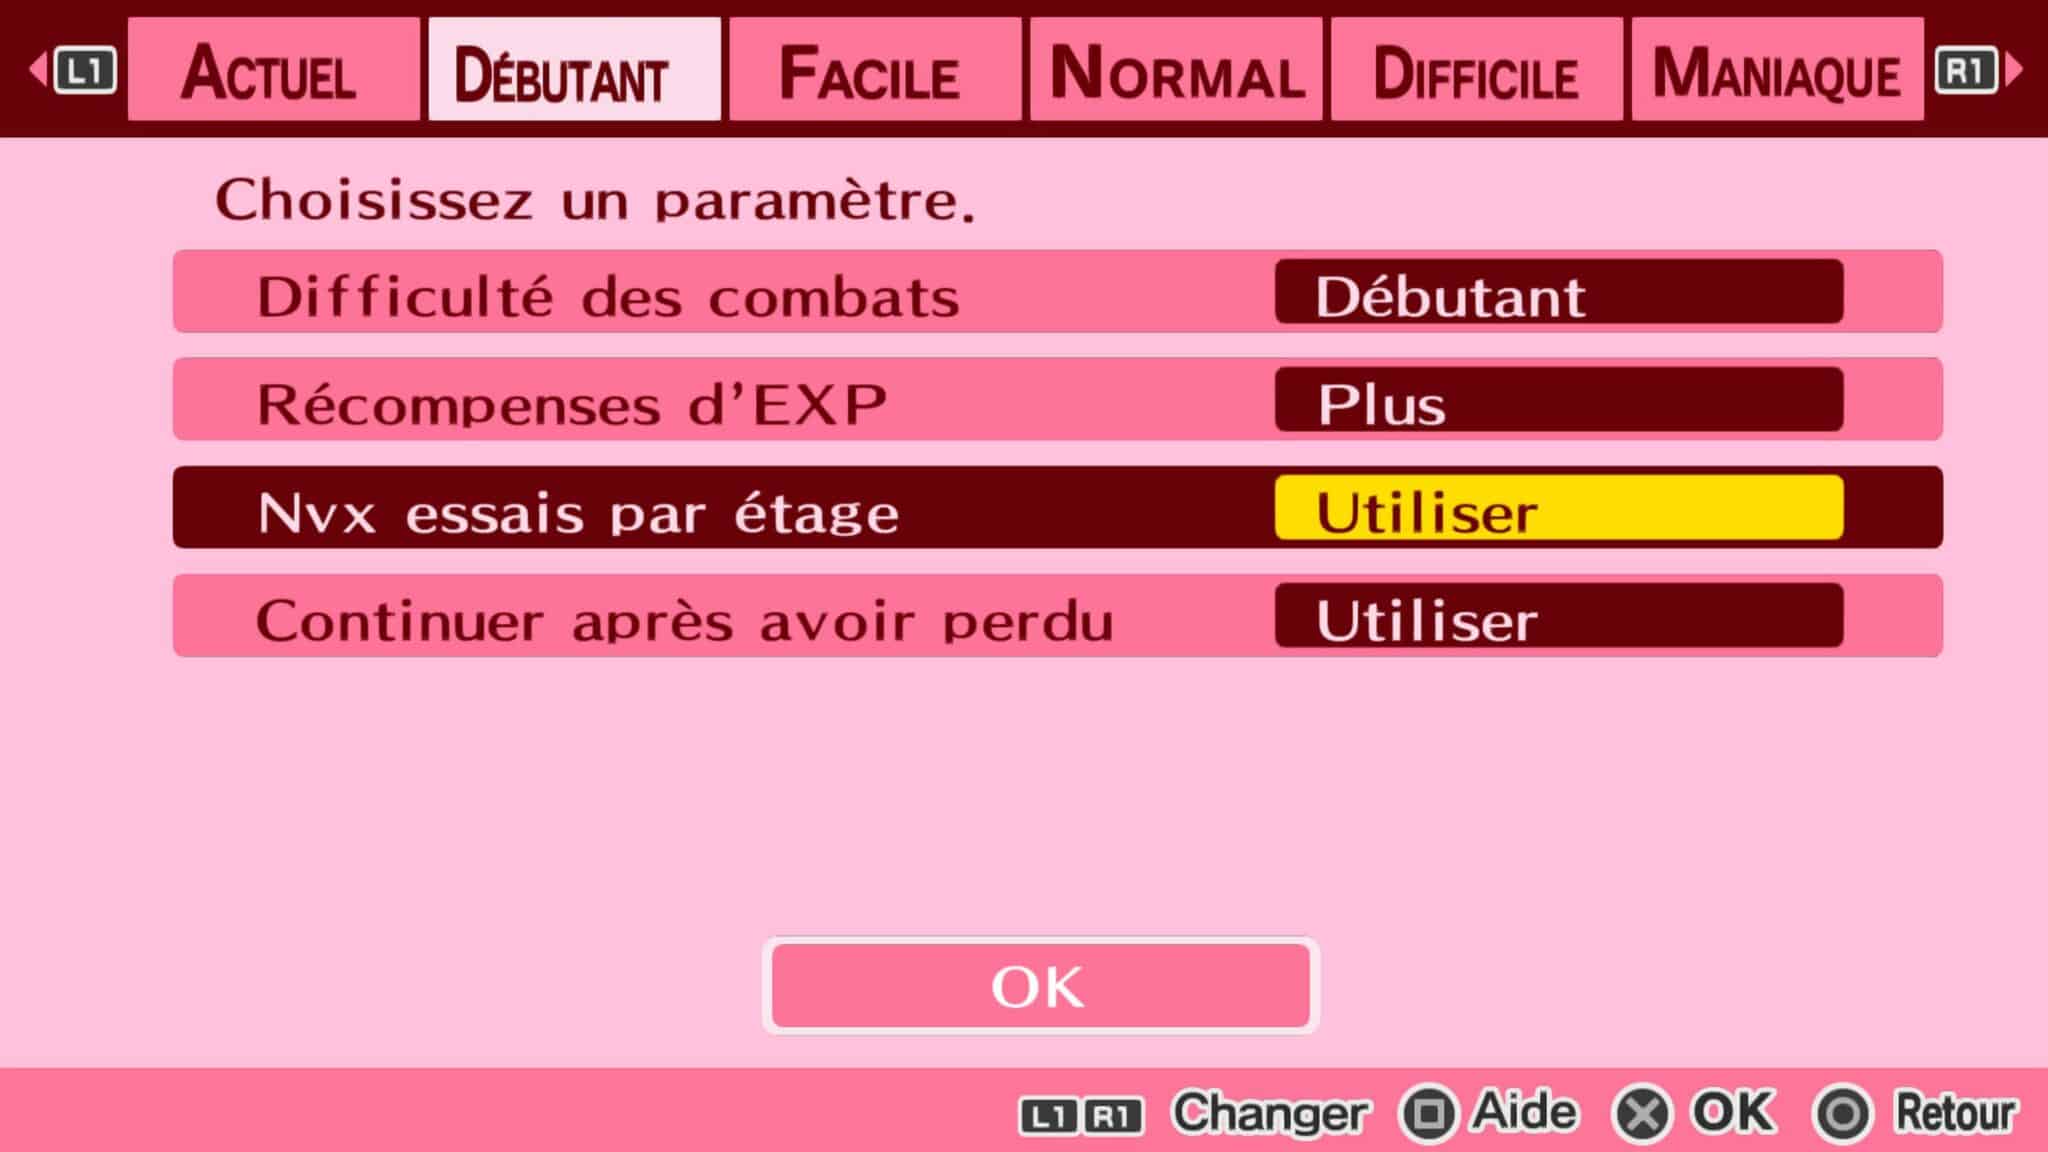 Persona 3 Portable - Difficulté